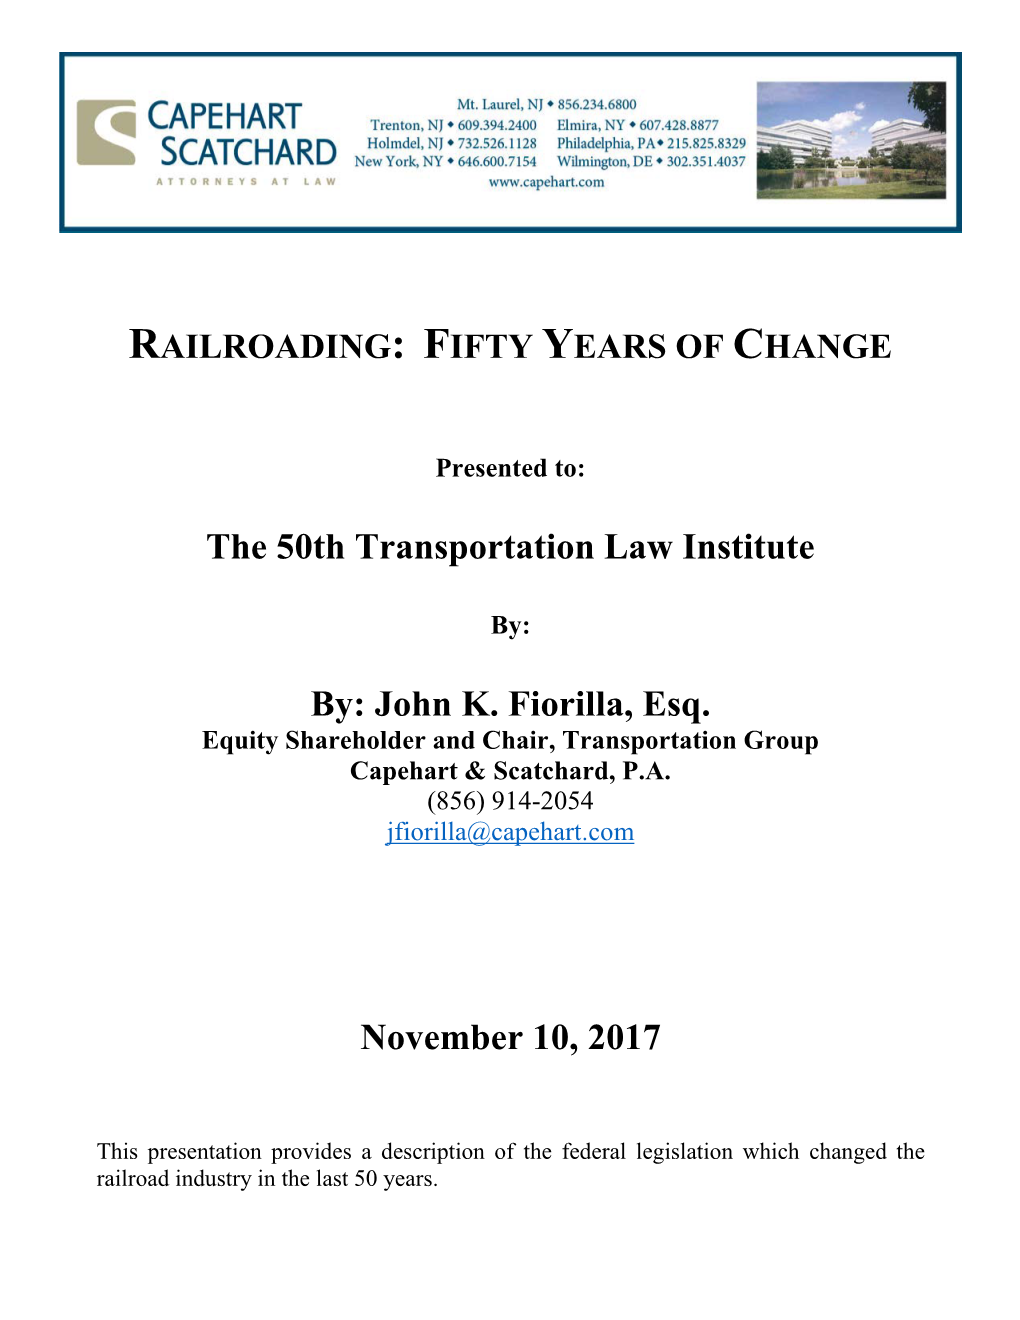 The 50Th Transportation Law Institute By: John K. Fiorilla, Esq. November